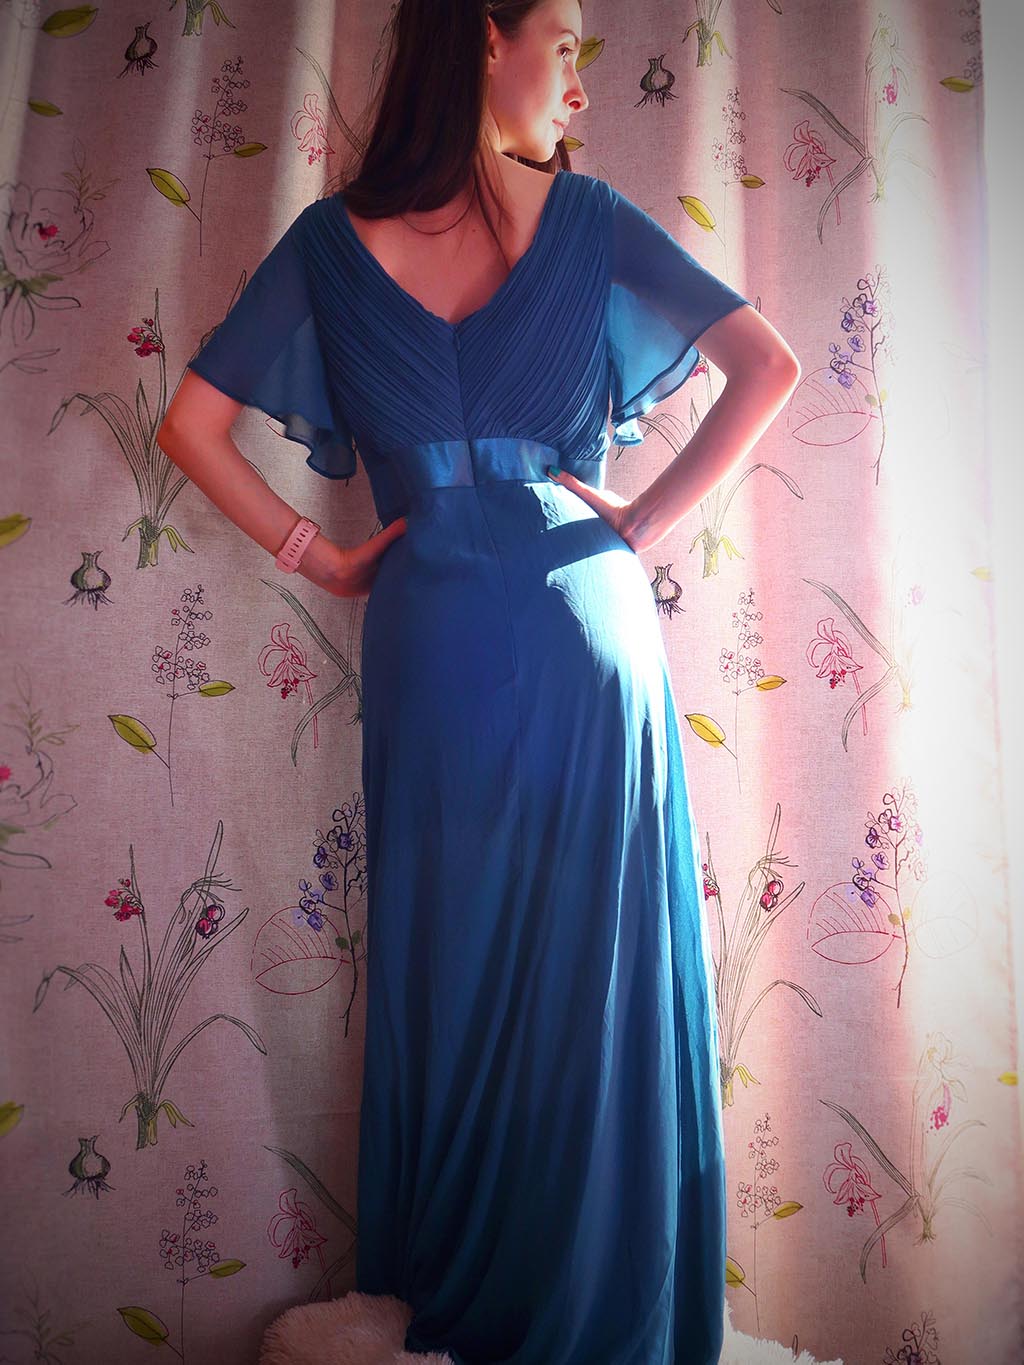 ever pretty dresses dress rochie rochii ocazie evenimente domnisoara onoare azuriu albastru teal